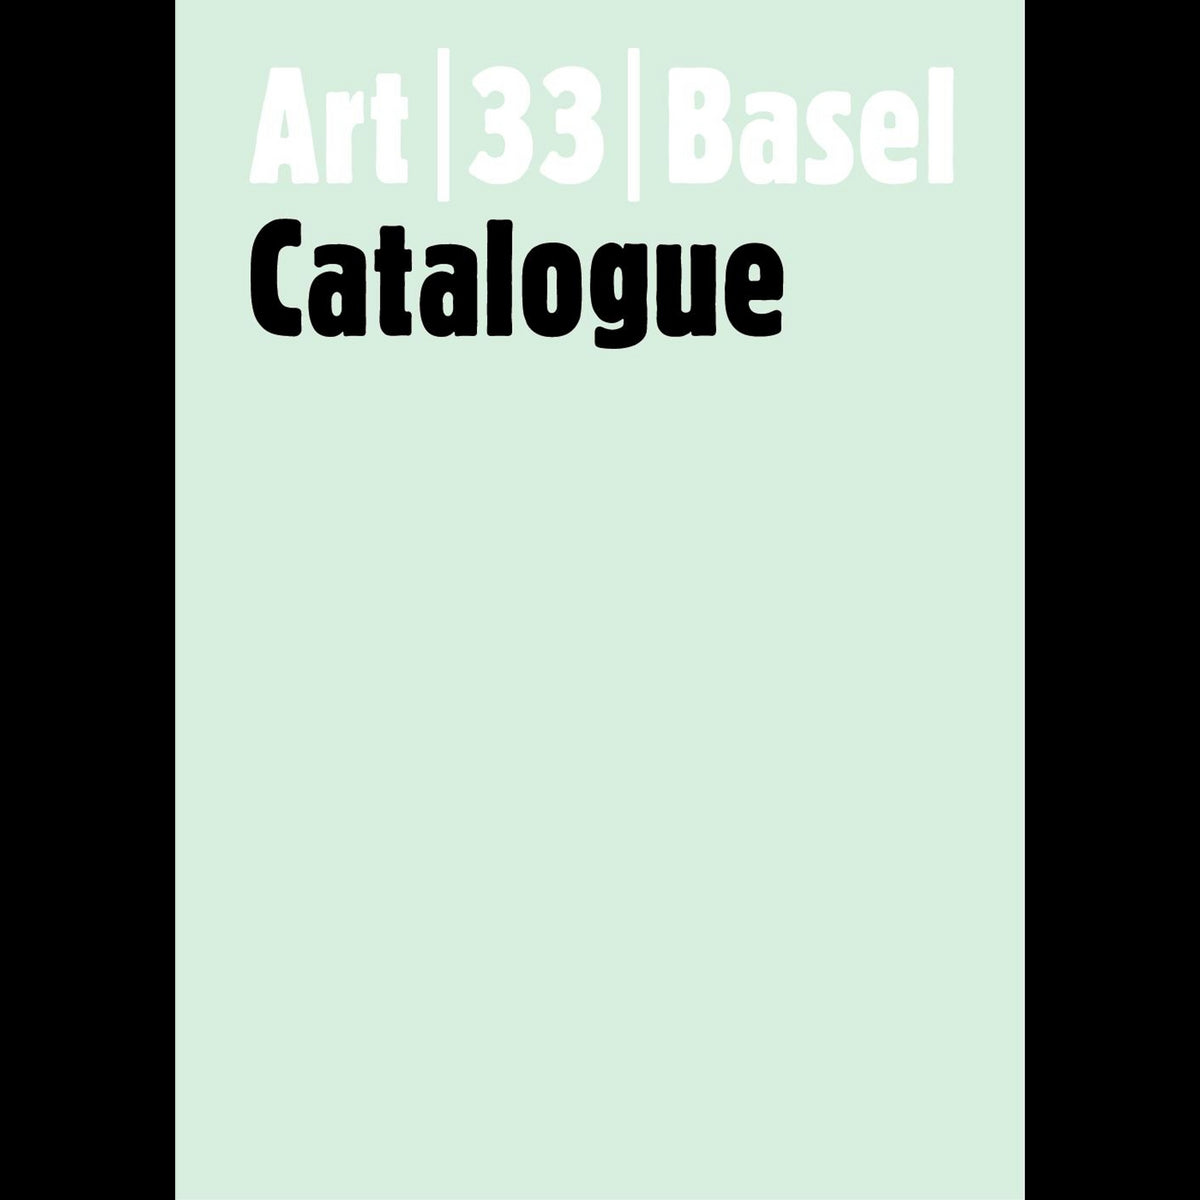 Coverbild Art 33 Basel